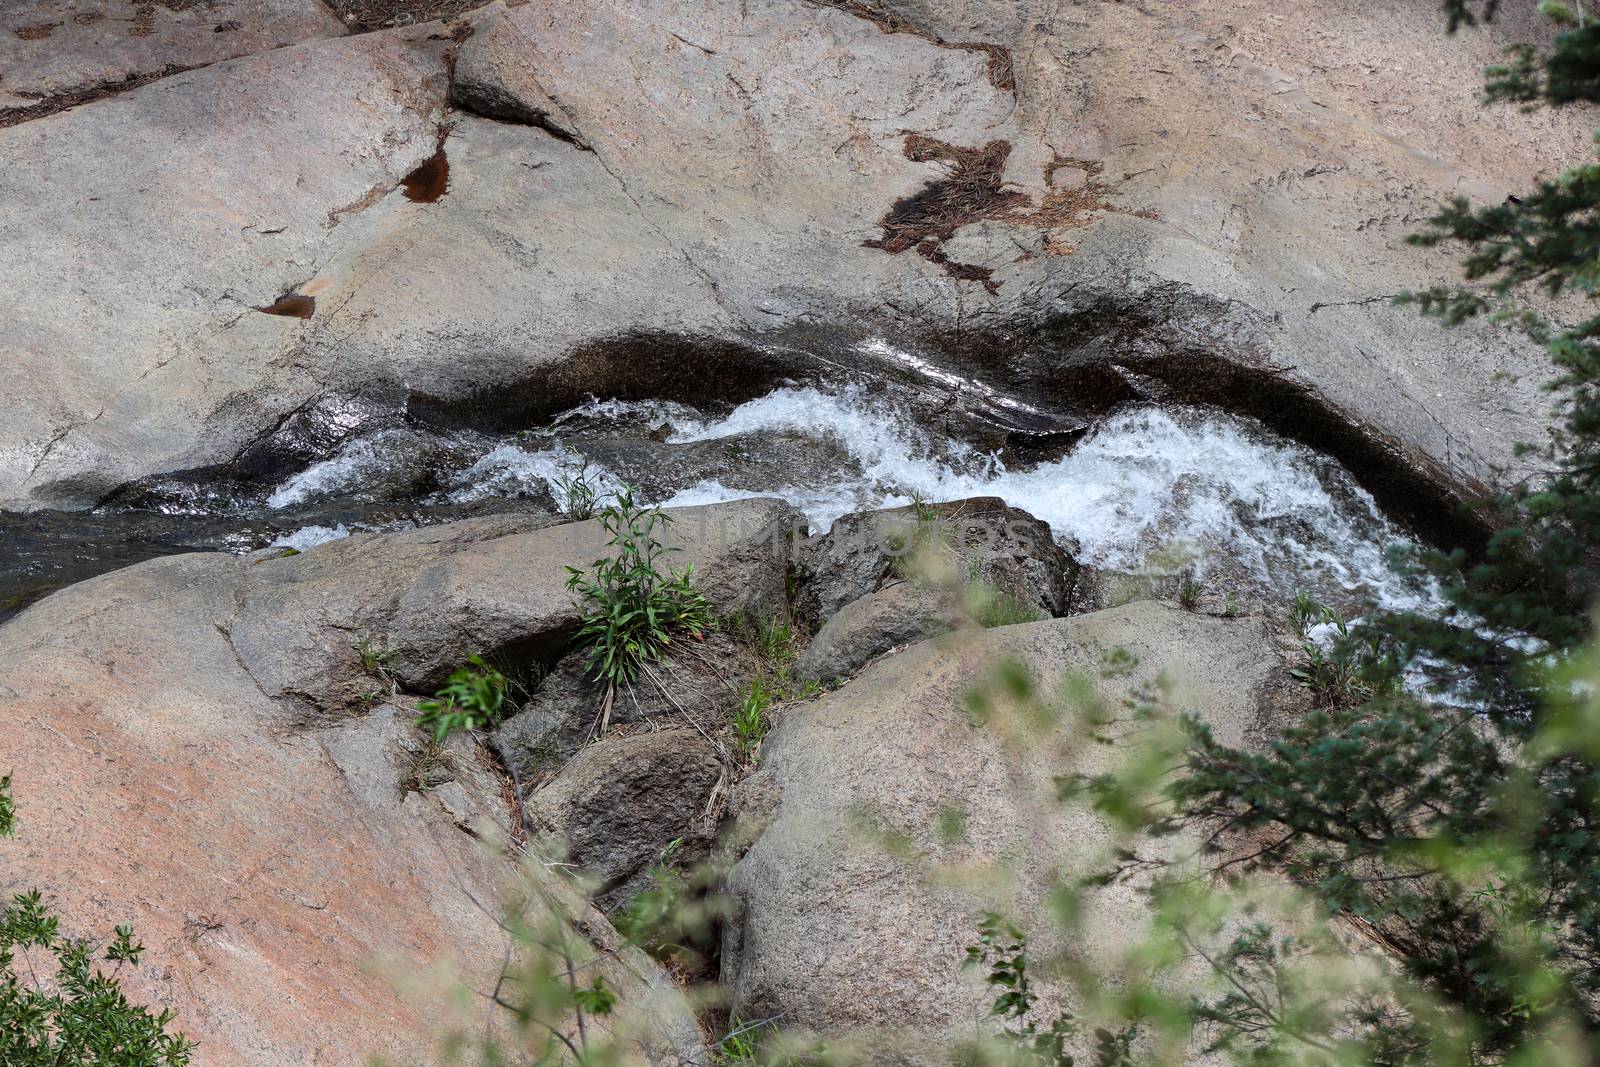 Helen hunt's falls Colorado waterfalls flowing stream by gena_wells